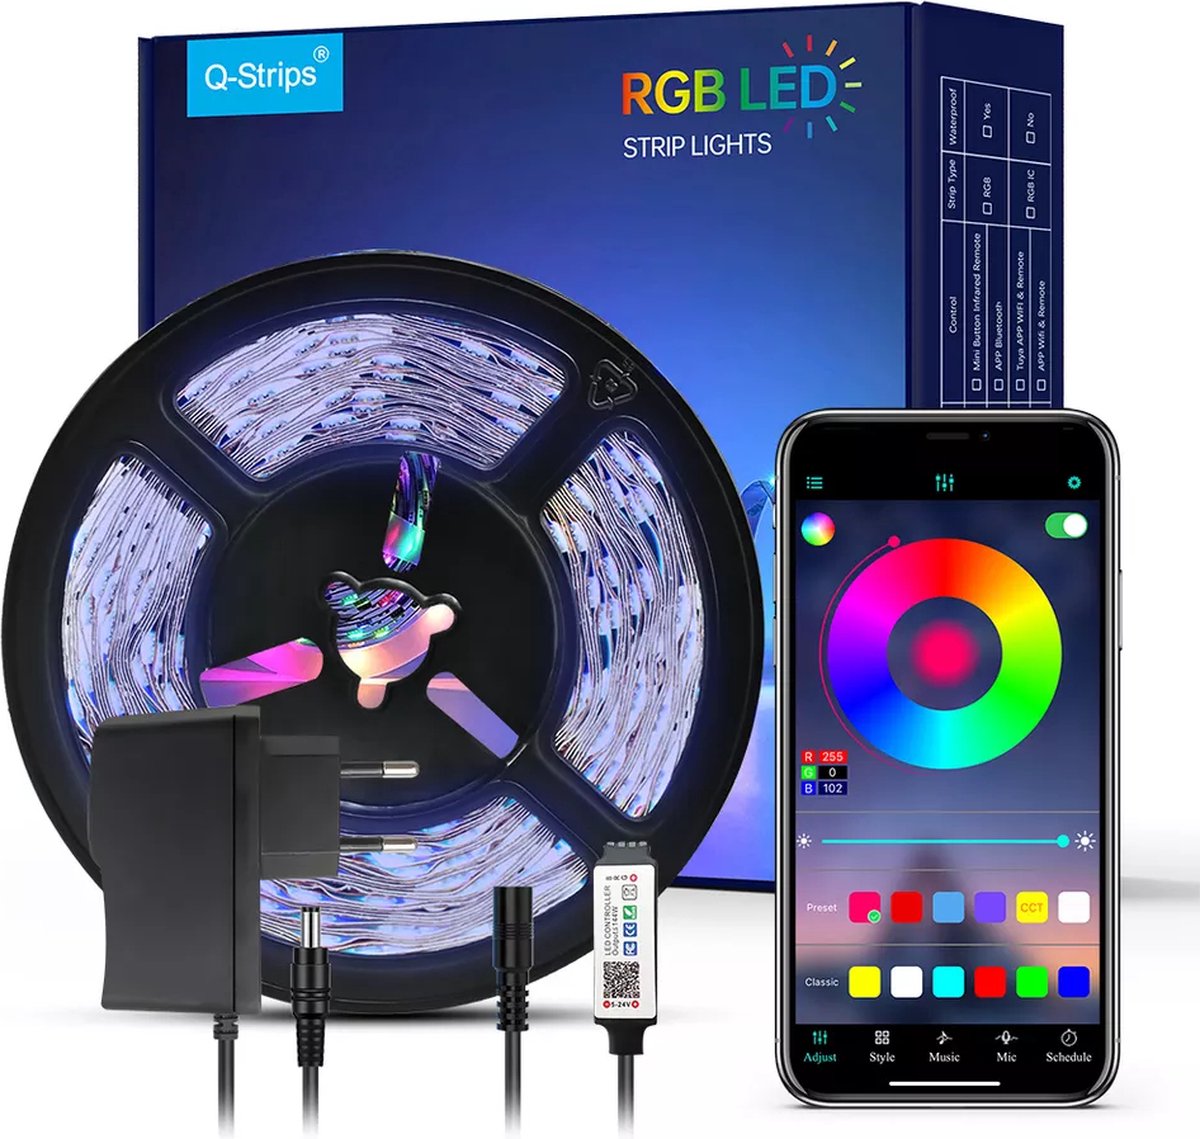 Led strip - 10 meter - RGB - met afstandsbediening & telefoon app - dimbaar - smart LED light verlichting - Led-strips - timer en muziek modus - Led Lights - smart home verlichting